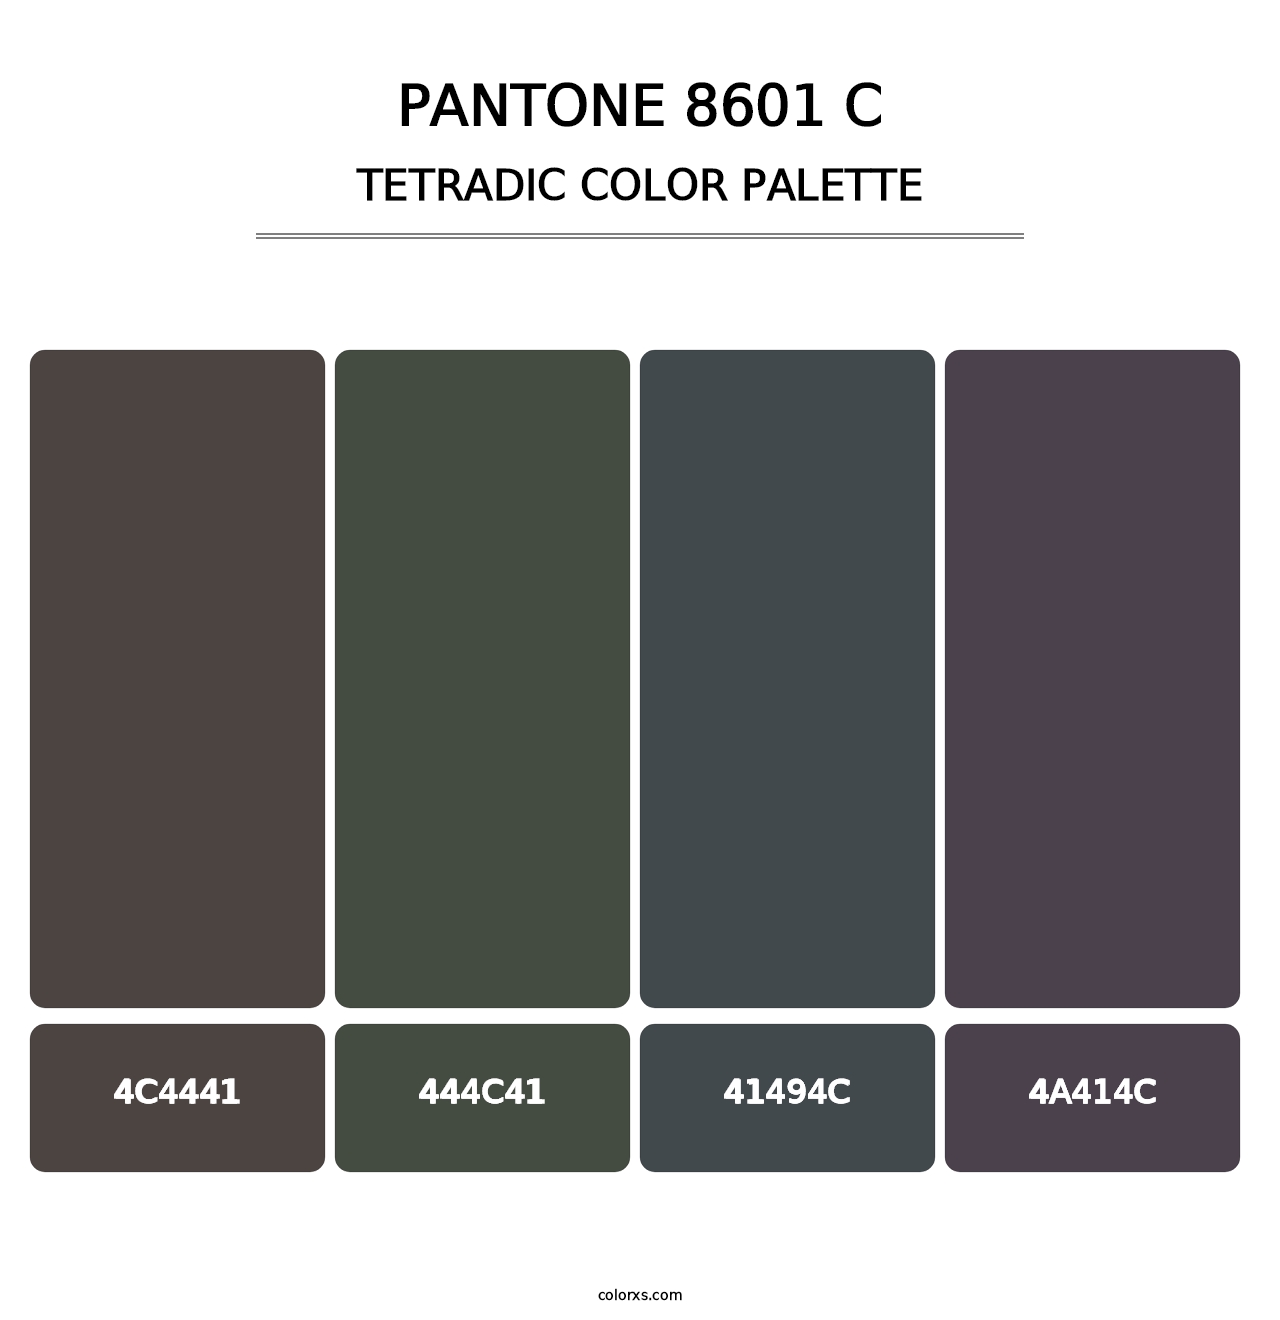 PANTONE 8601 C - Tetradic Color Palette